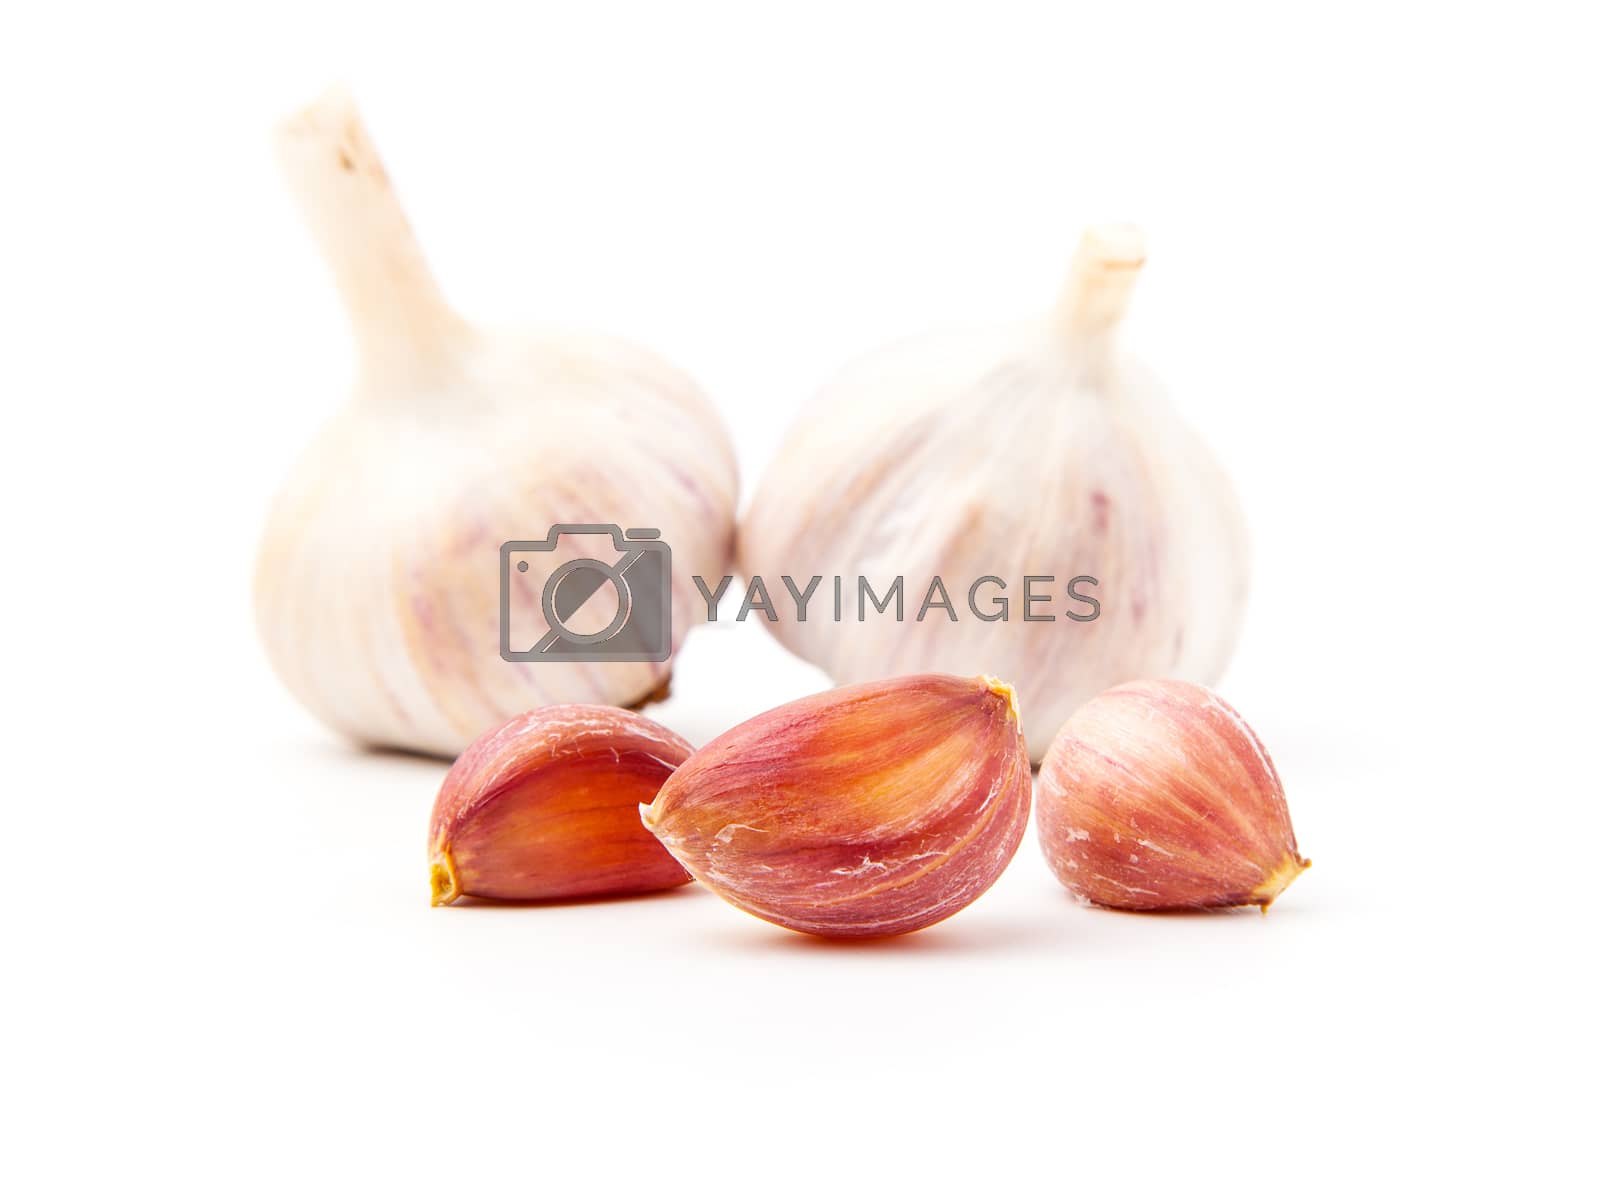 Royalty free image of Fresh garlic isolated on white background by motorolka